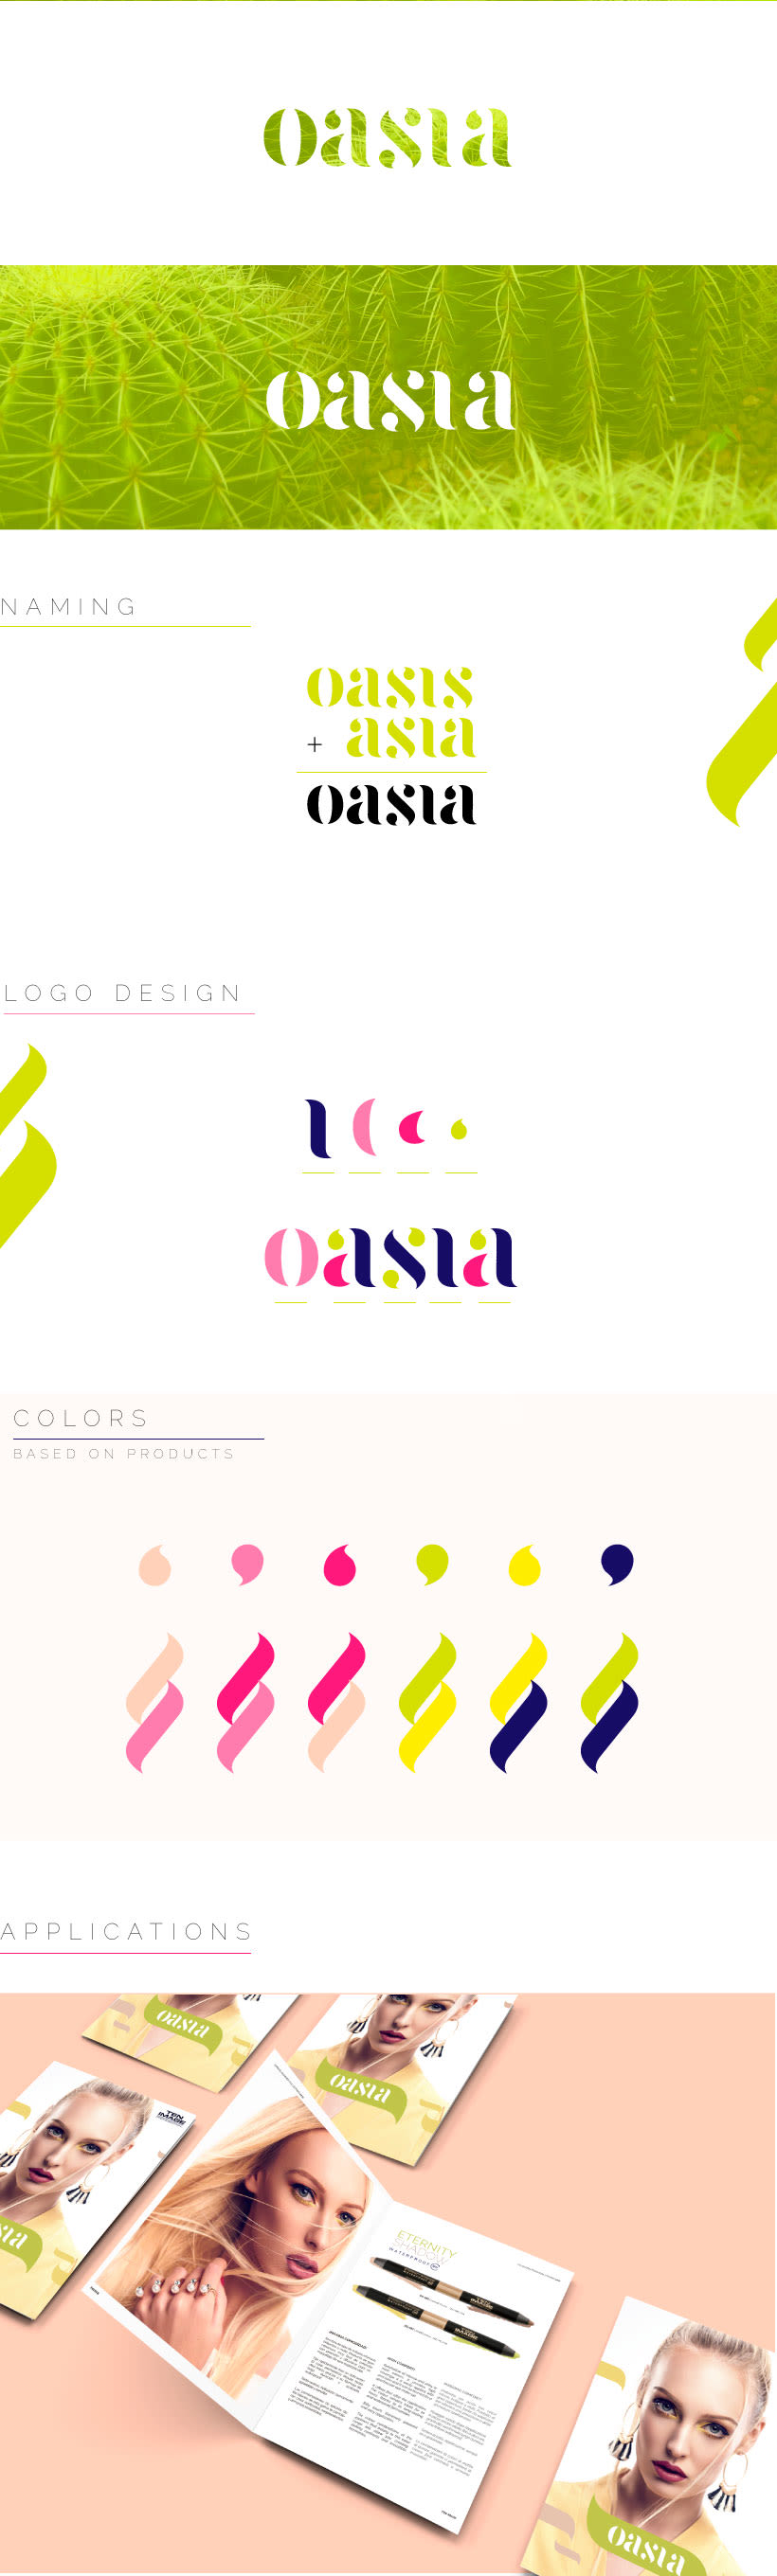 Oasia - Brand Design 0